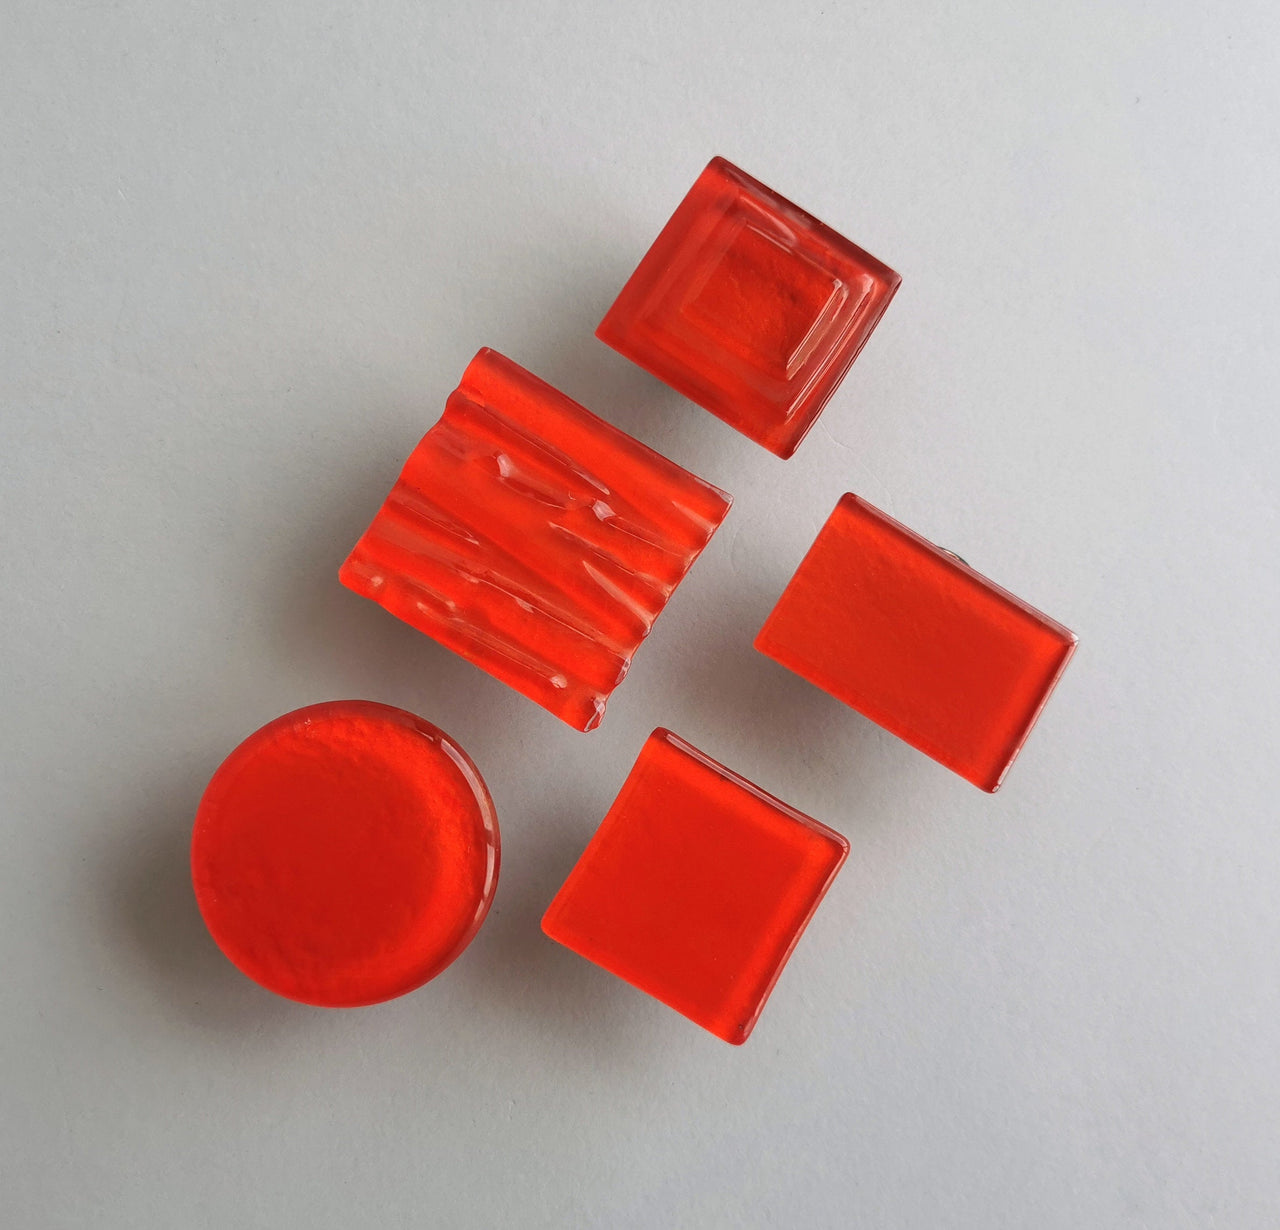 Red Orange Fused Glass Knob. Artistic Reddish Orange Furniture Glass Knob - 0030